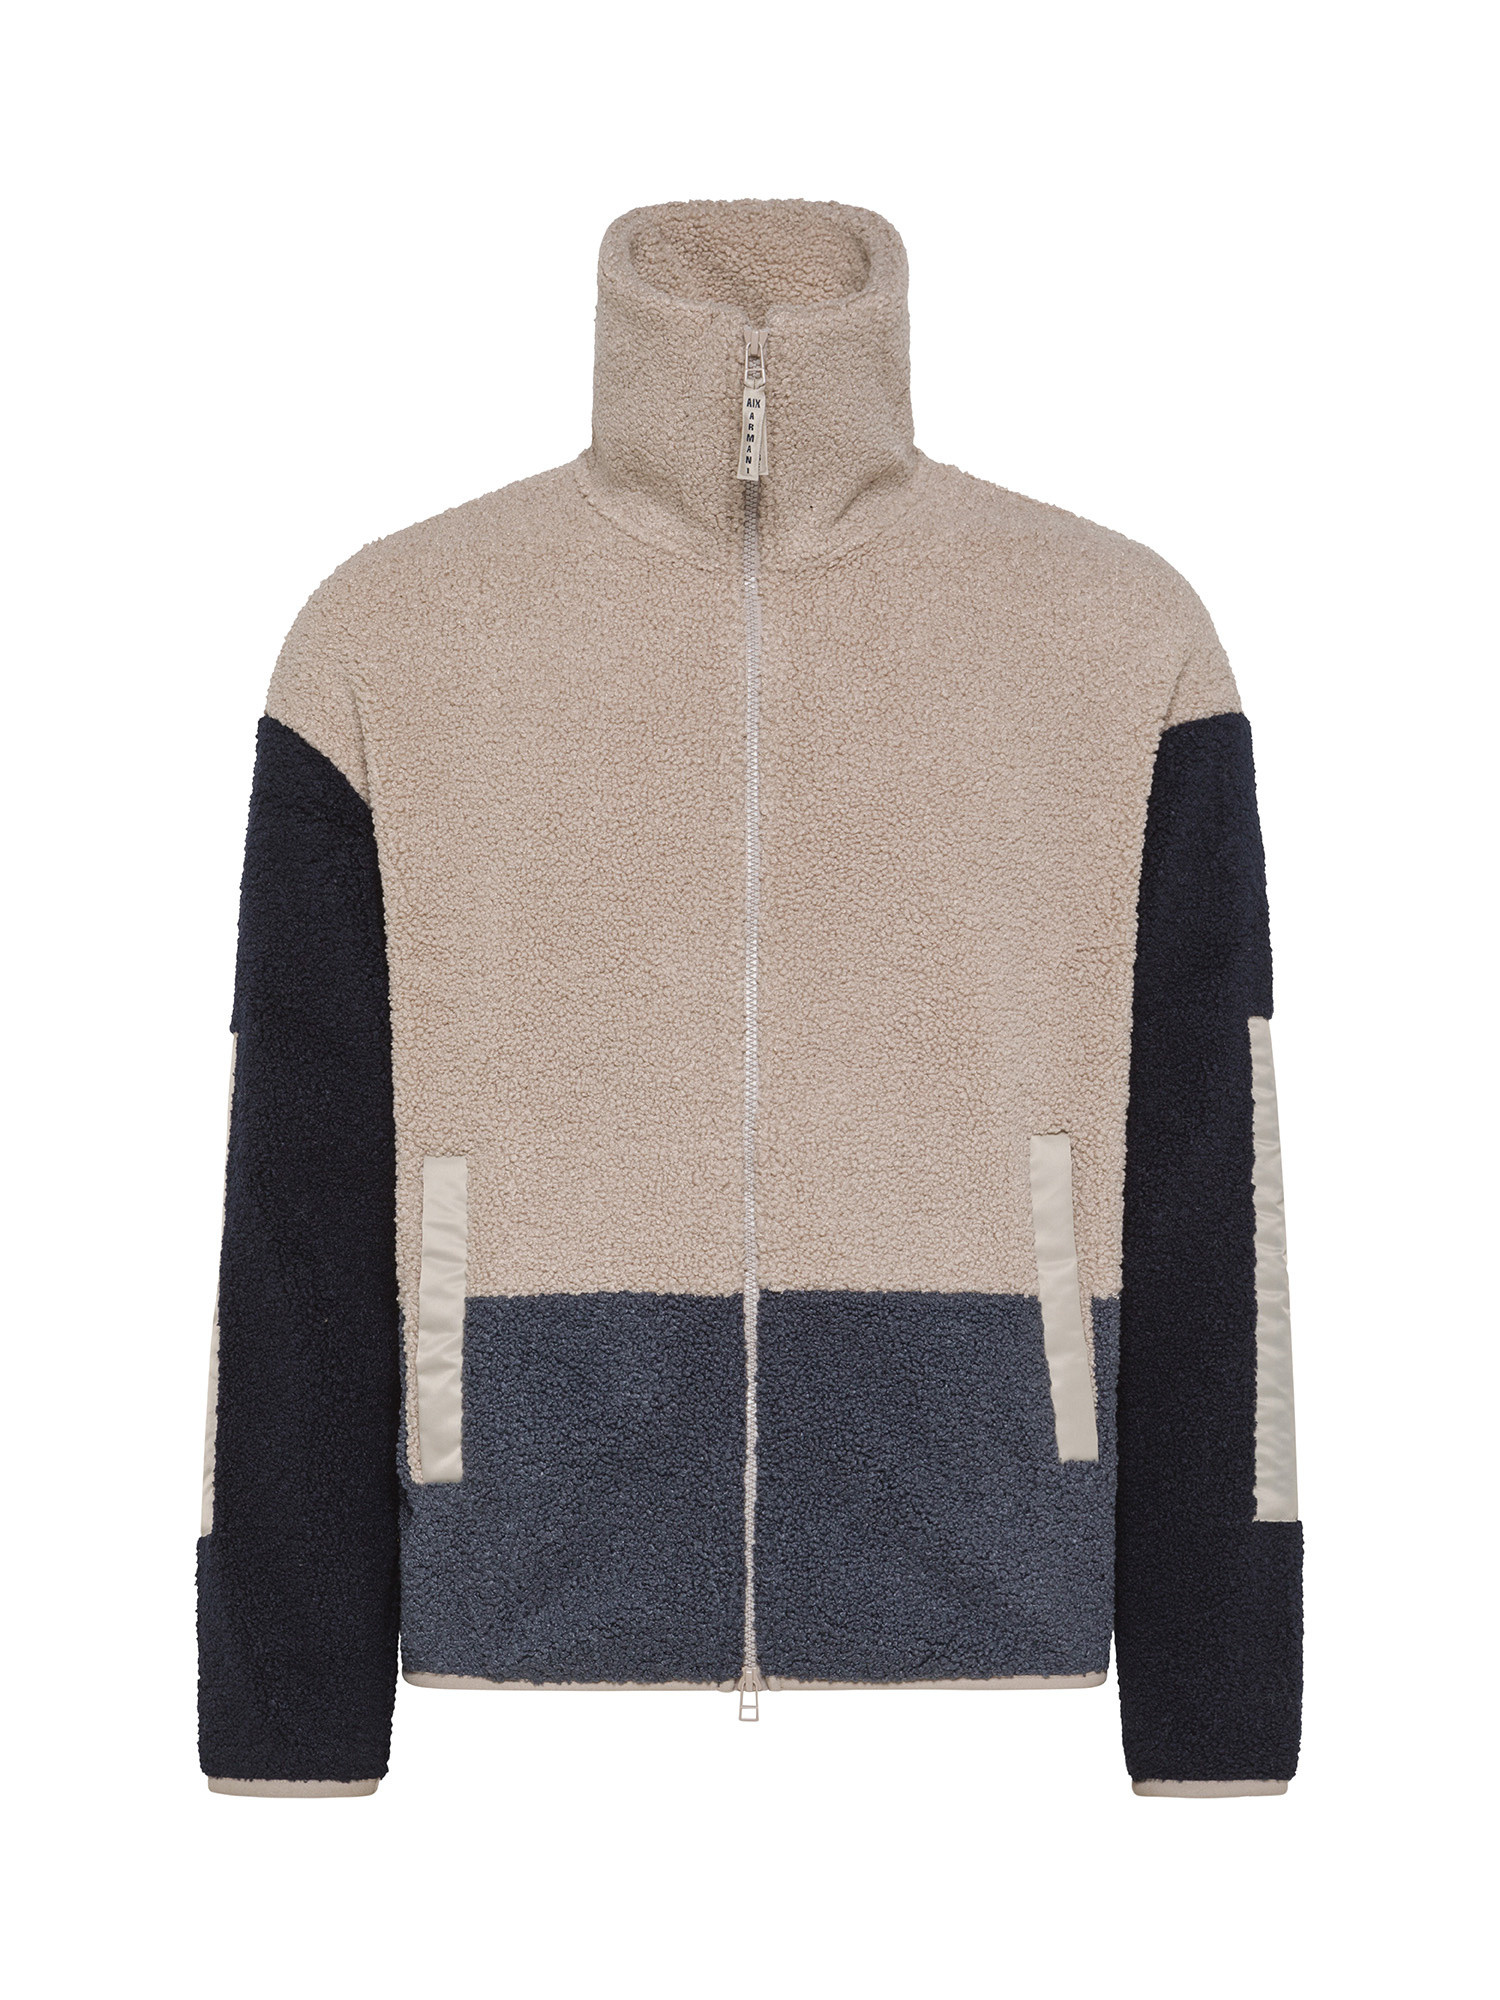 Armani Exchange - Patchwork sweatshirt, Multicolor, large image number 0